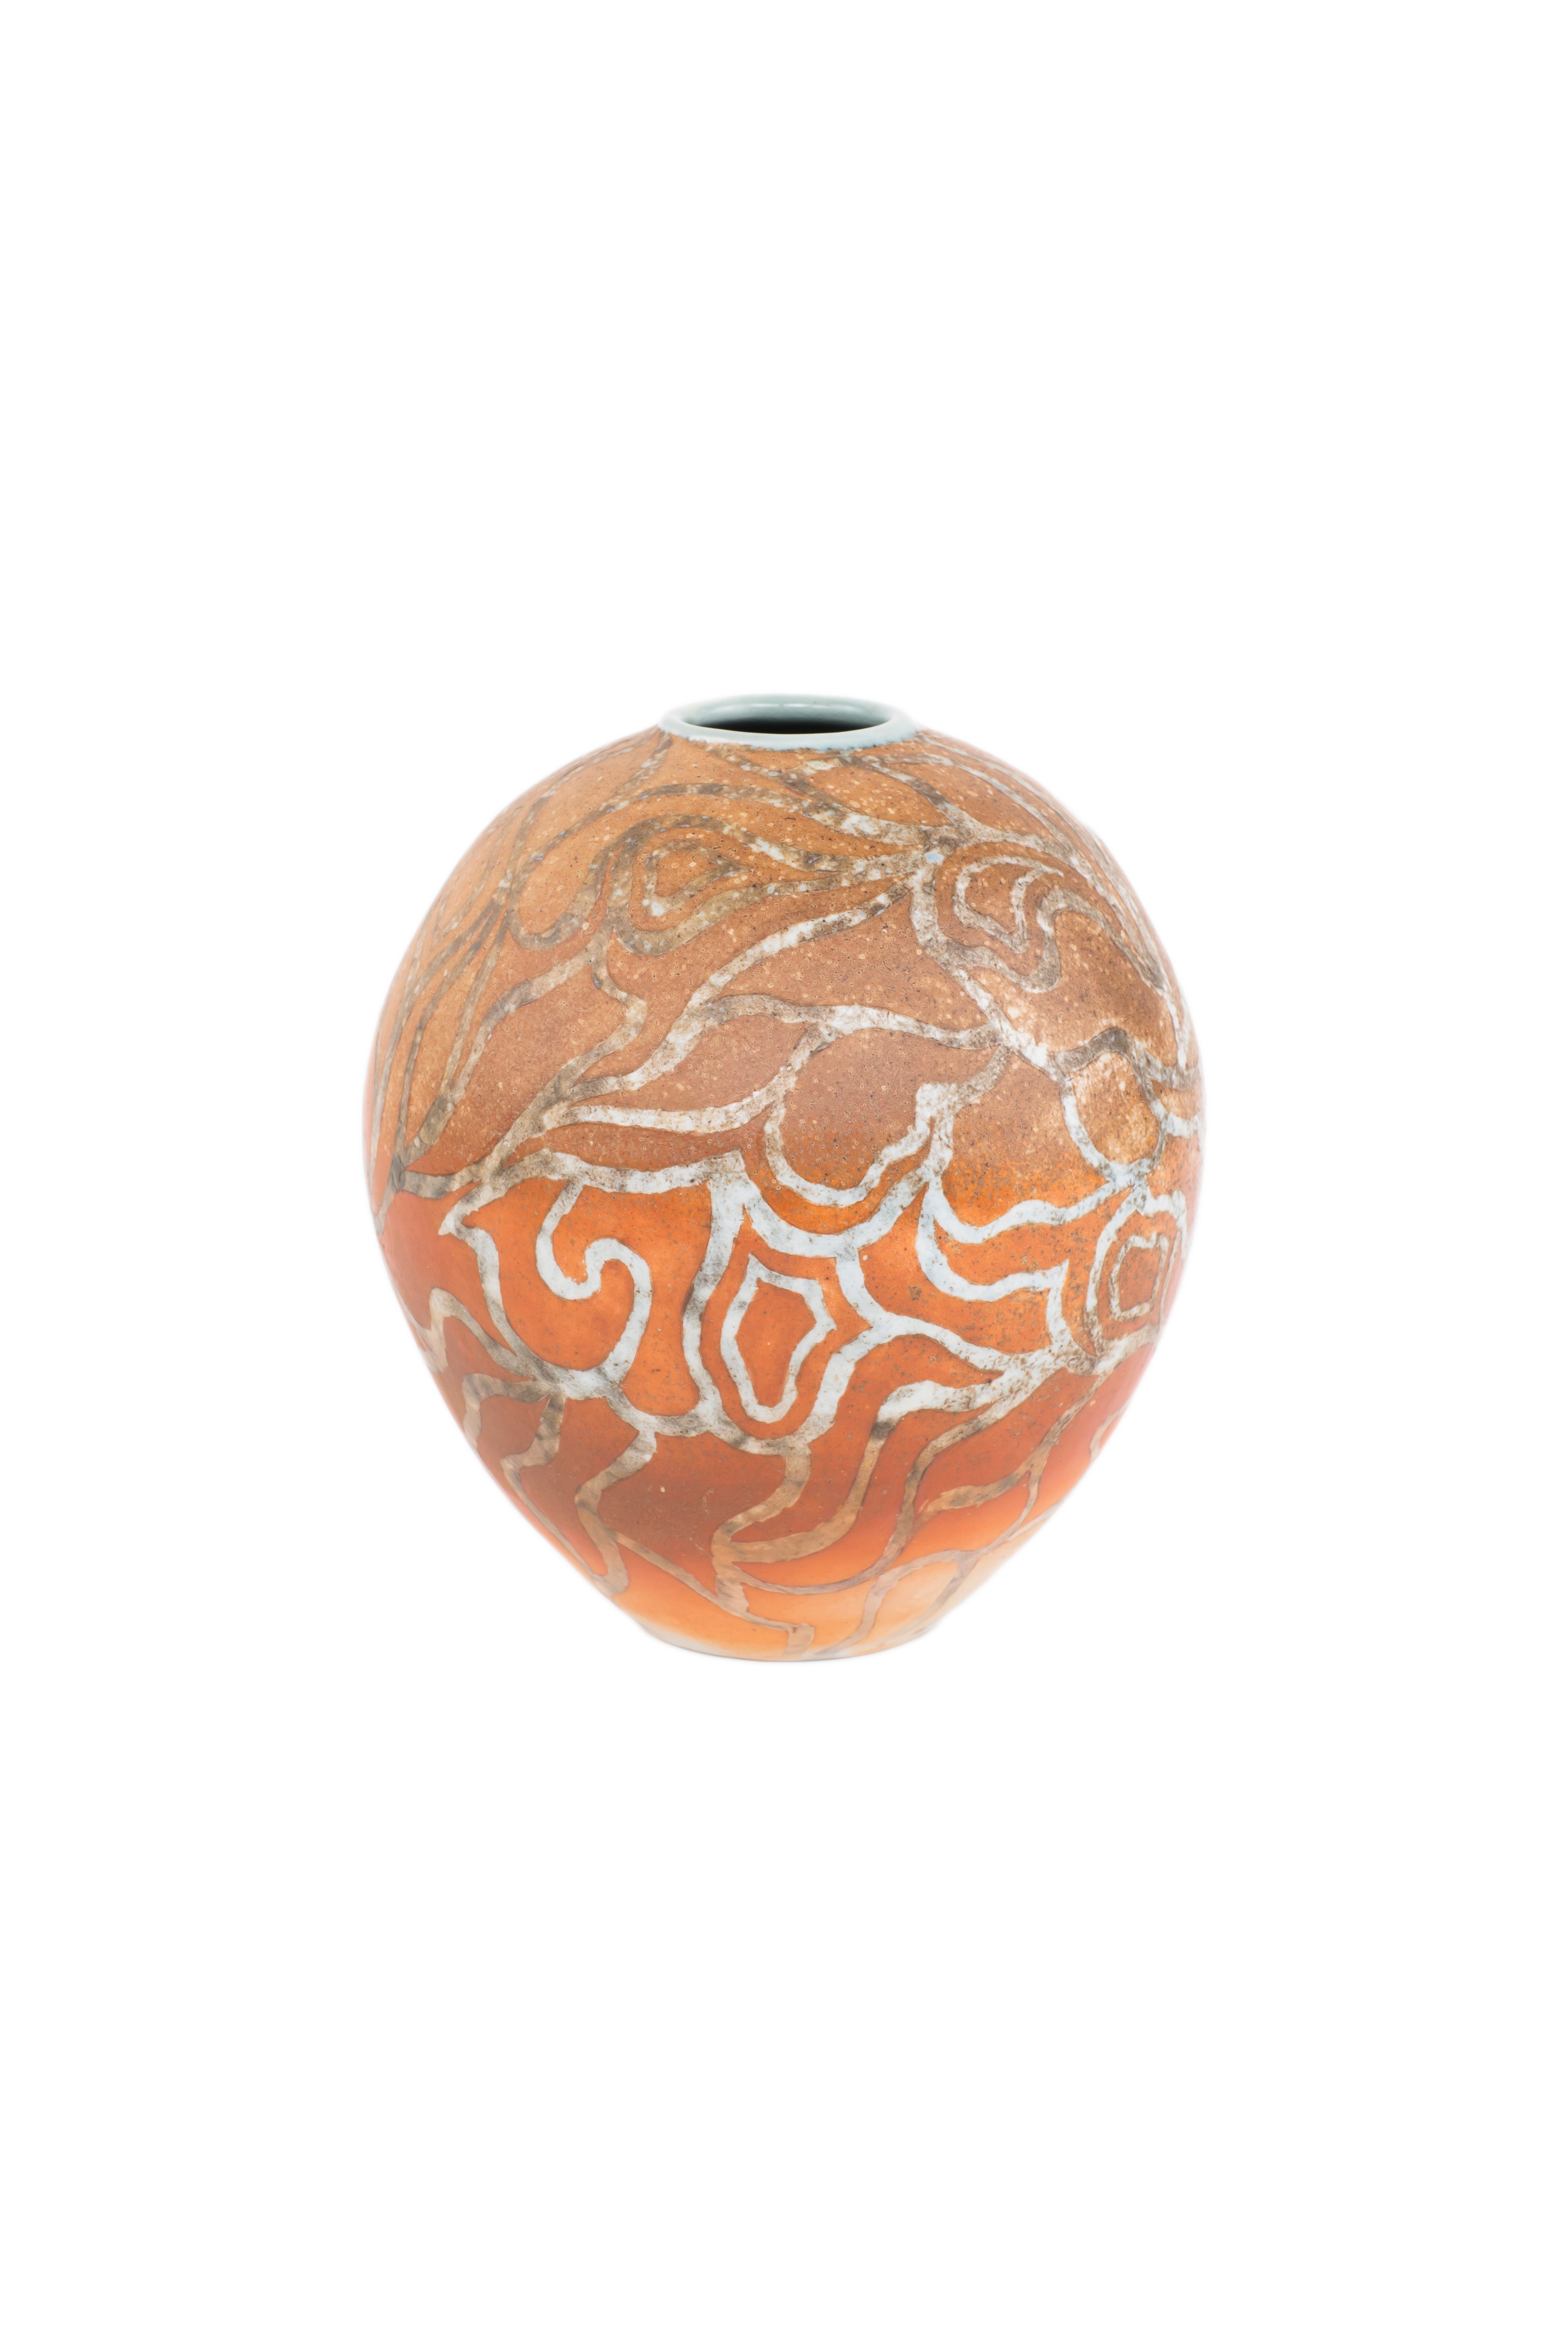 An Art Deco Style Ceramic Decorative Vase by Douglas Breitbart